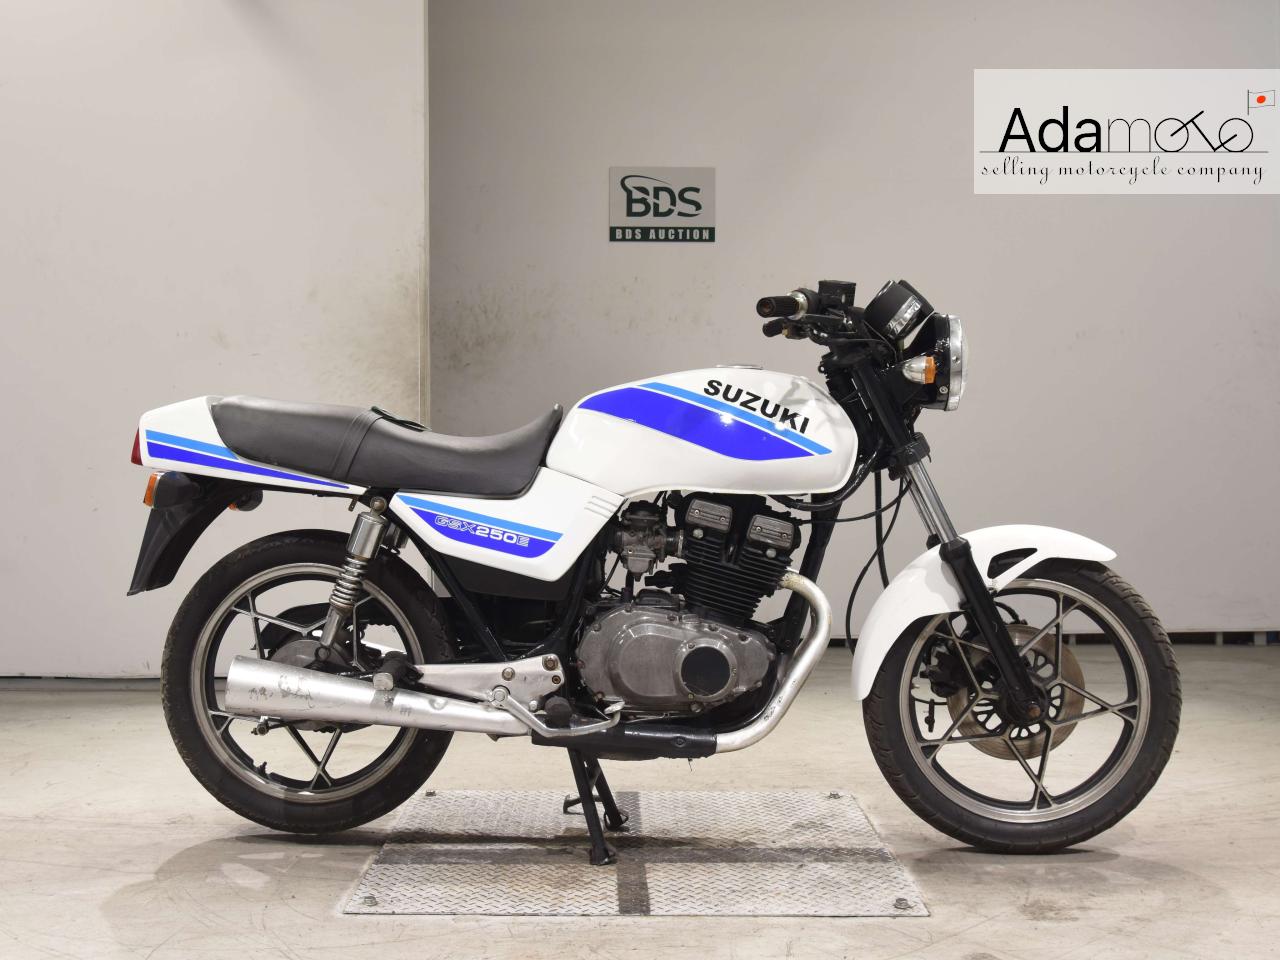 Suzuki GSX250E - Adamoto - Motorcycles from Japan